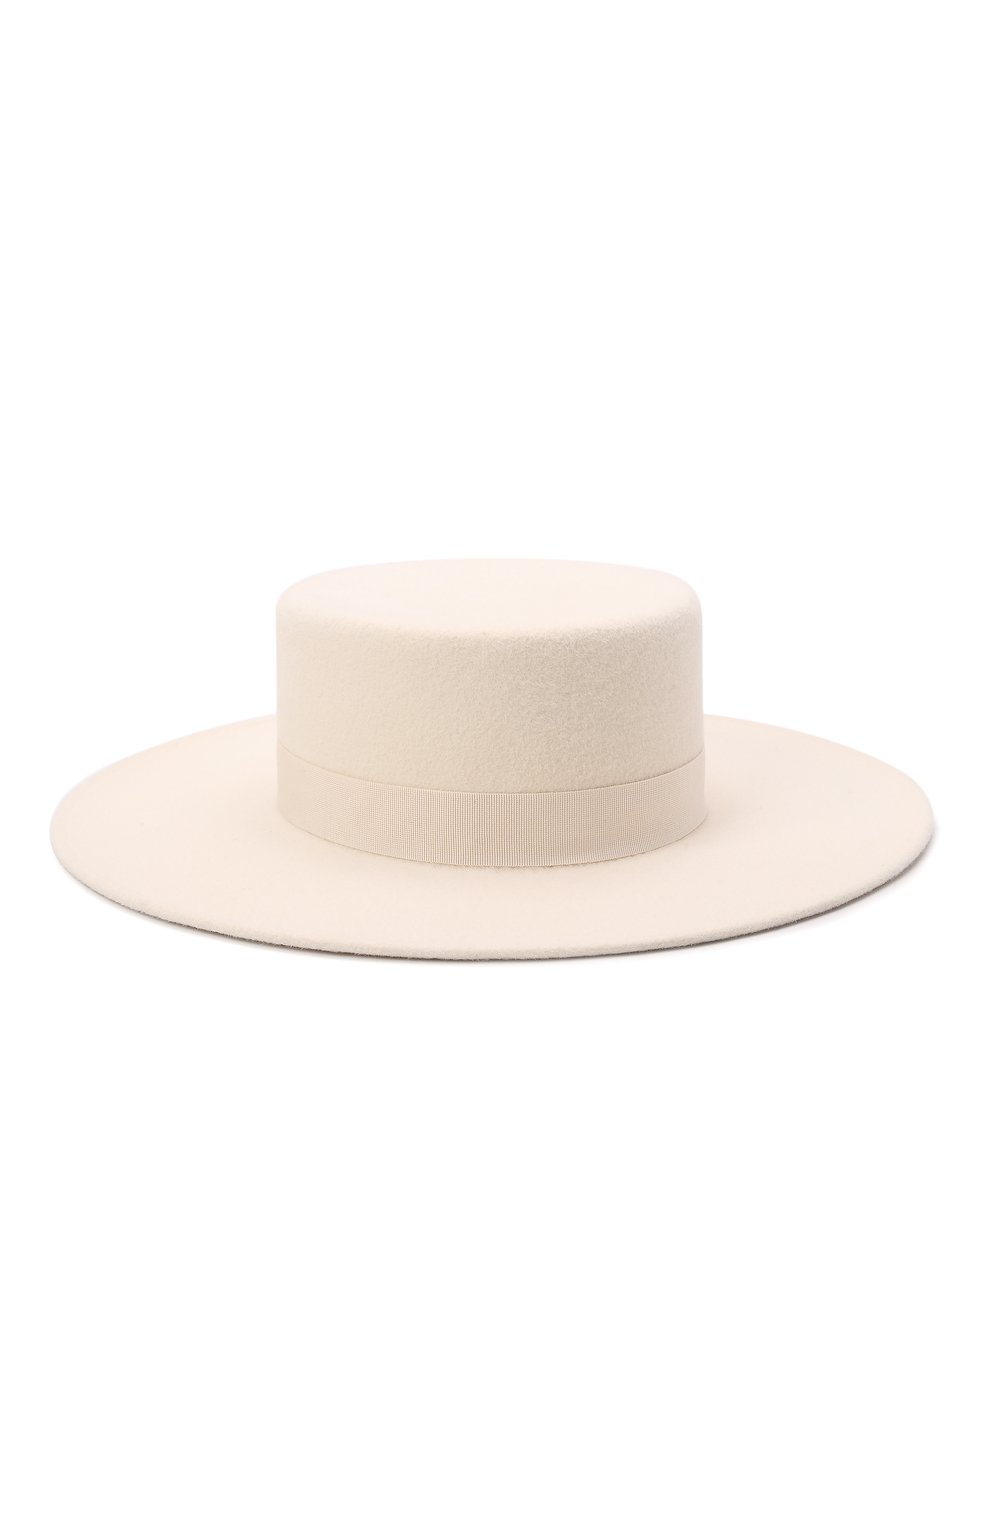 Женская шляпа kanotie max COCOSHNICK HEADDRESS белого цвета, арт. kanotiemax | Фото 1 (Материал: Текстиль, Хлопок)